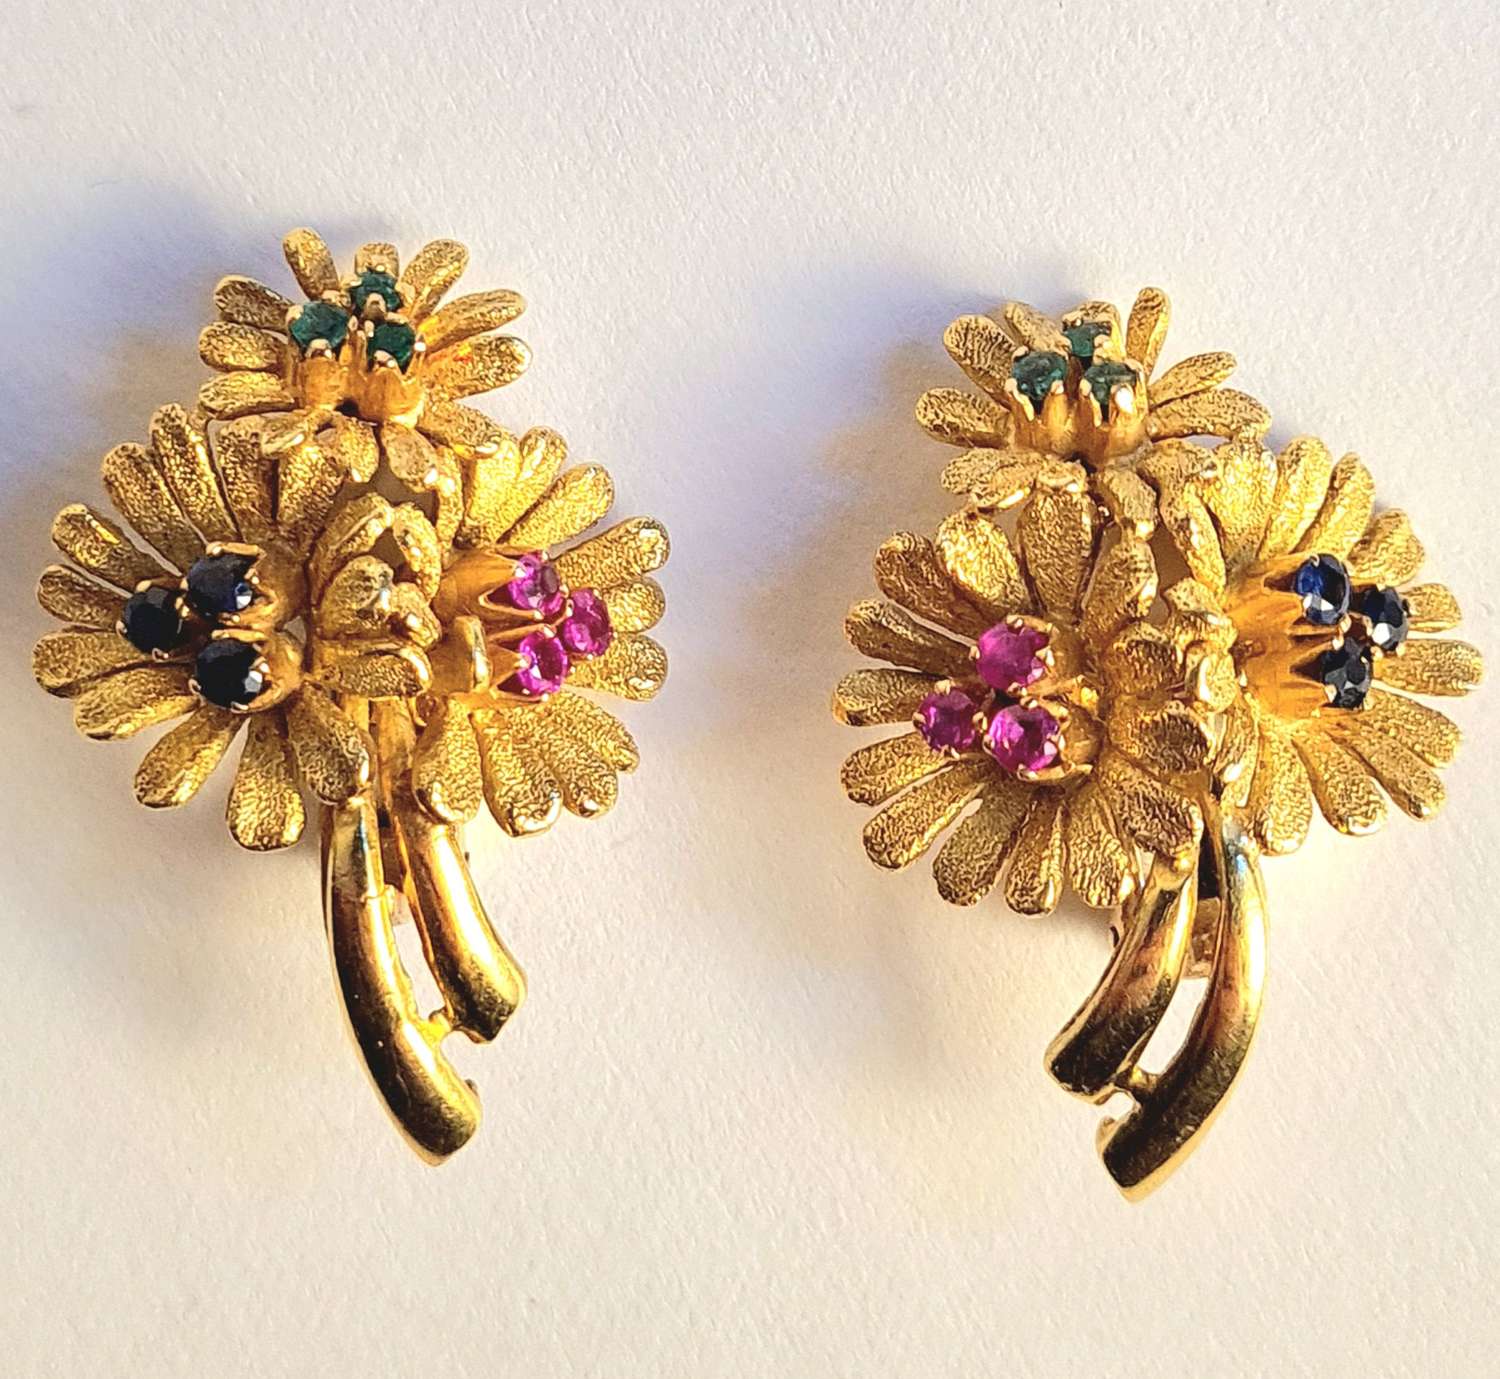 A Pair of Floral Earrings